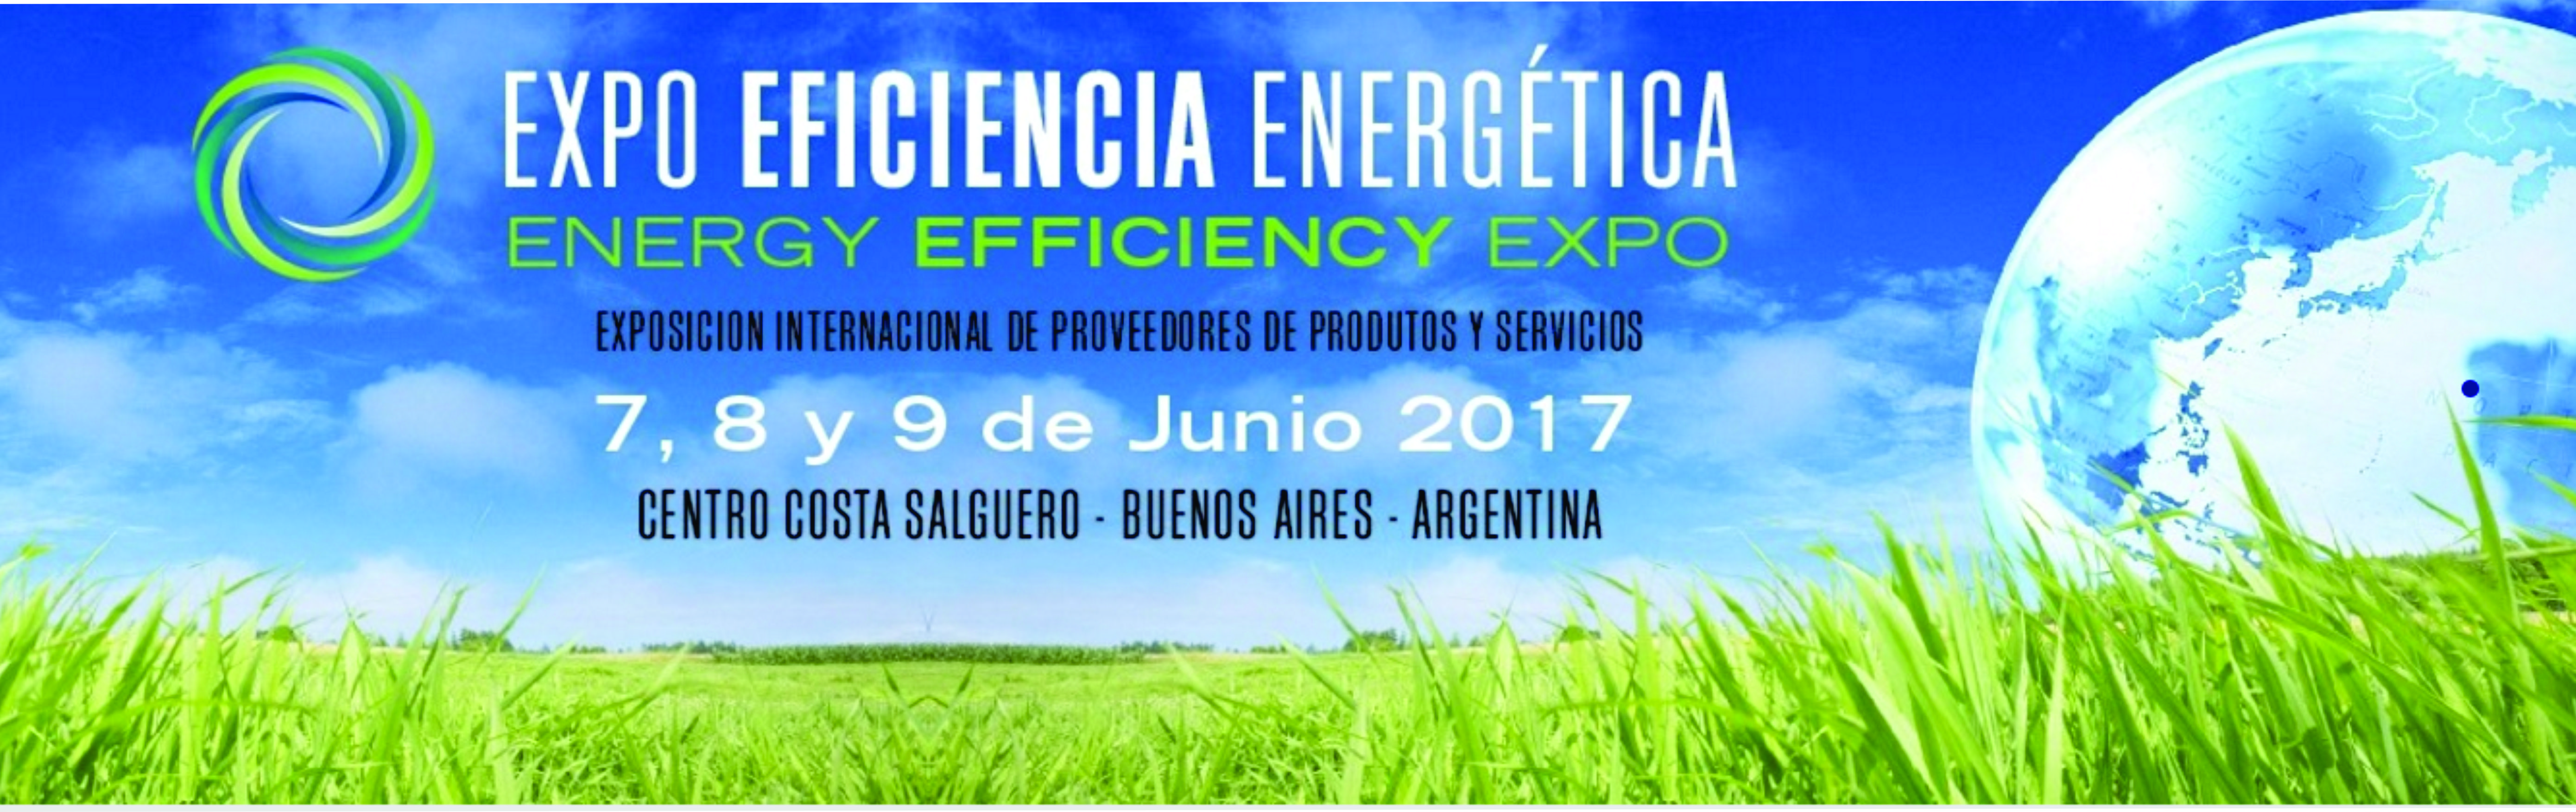 Expo Eficiencia Energética Argentina 2017